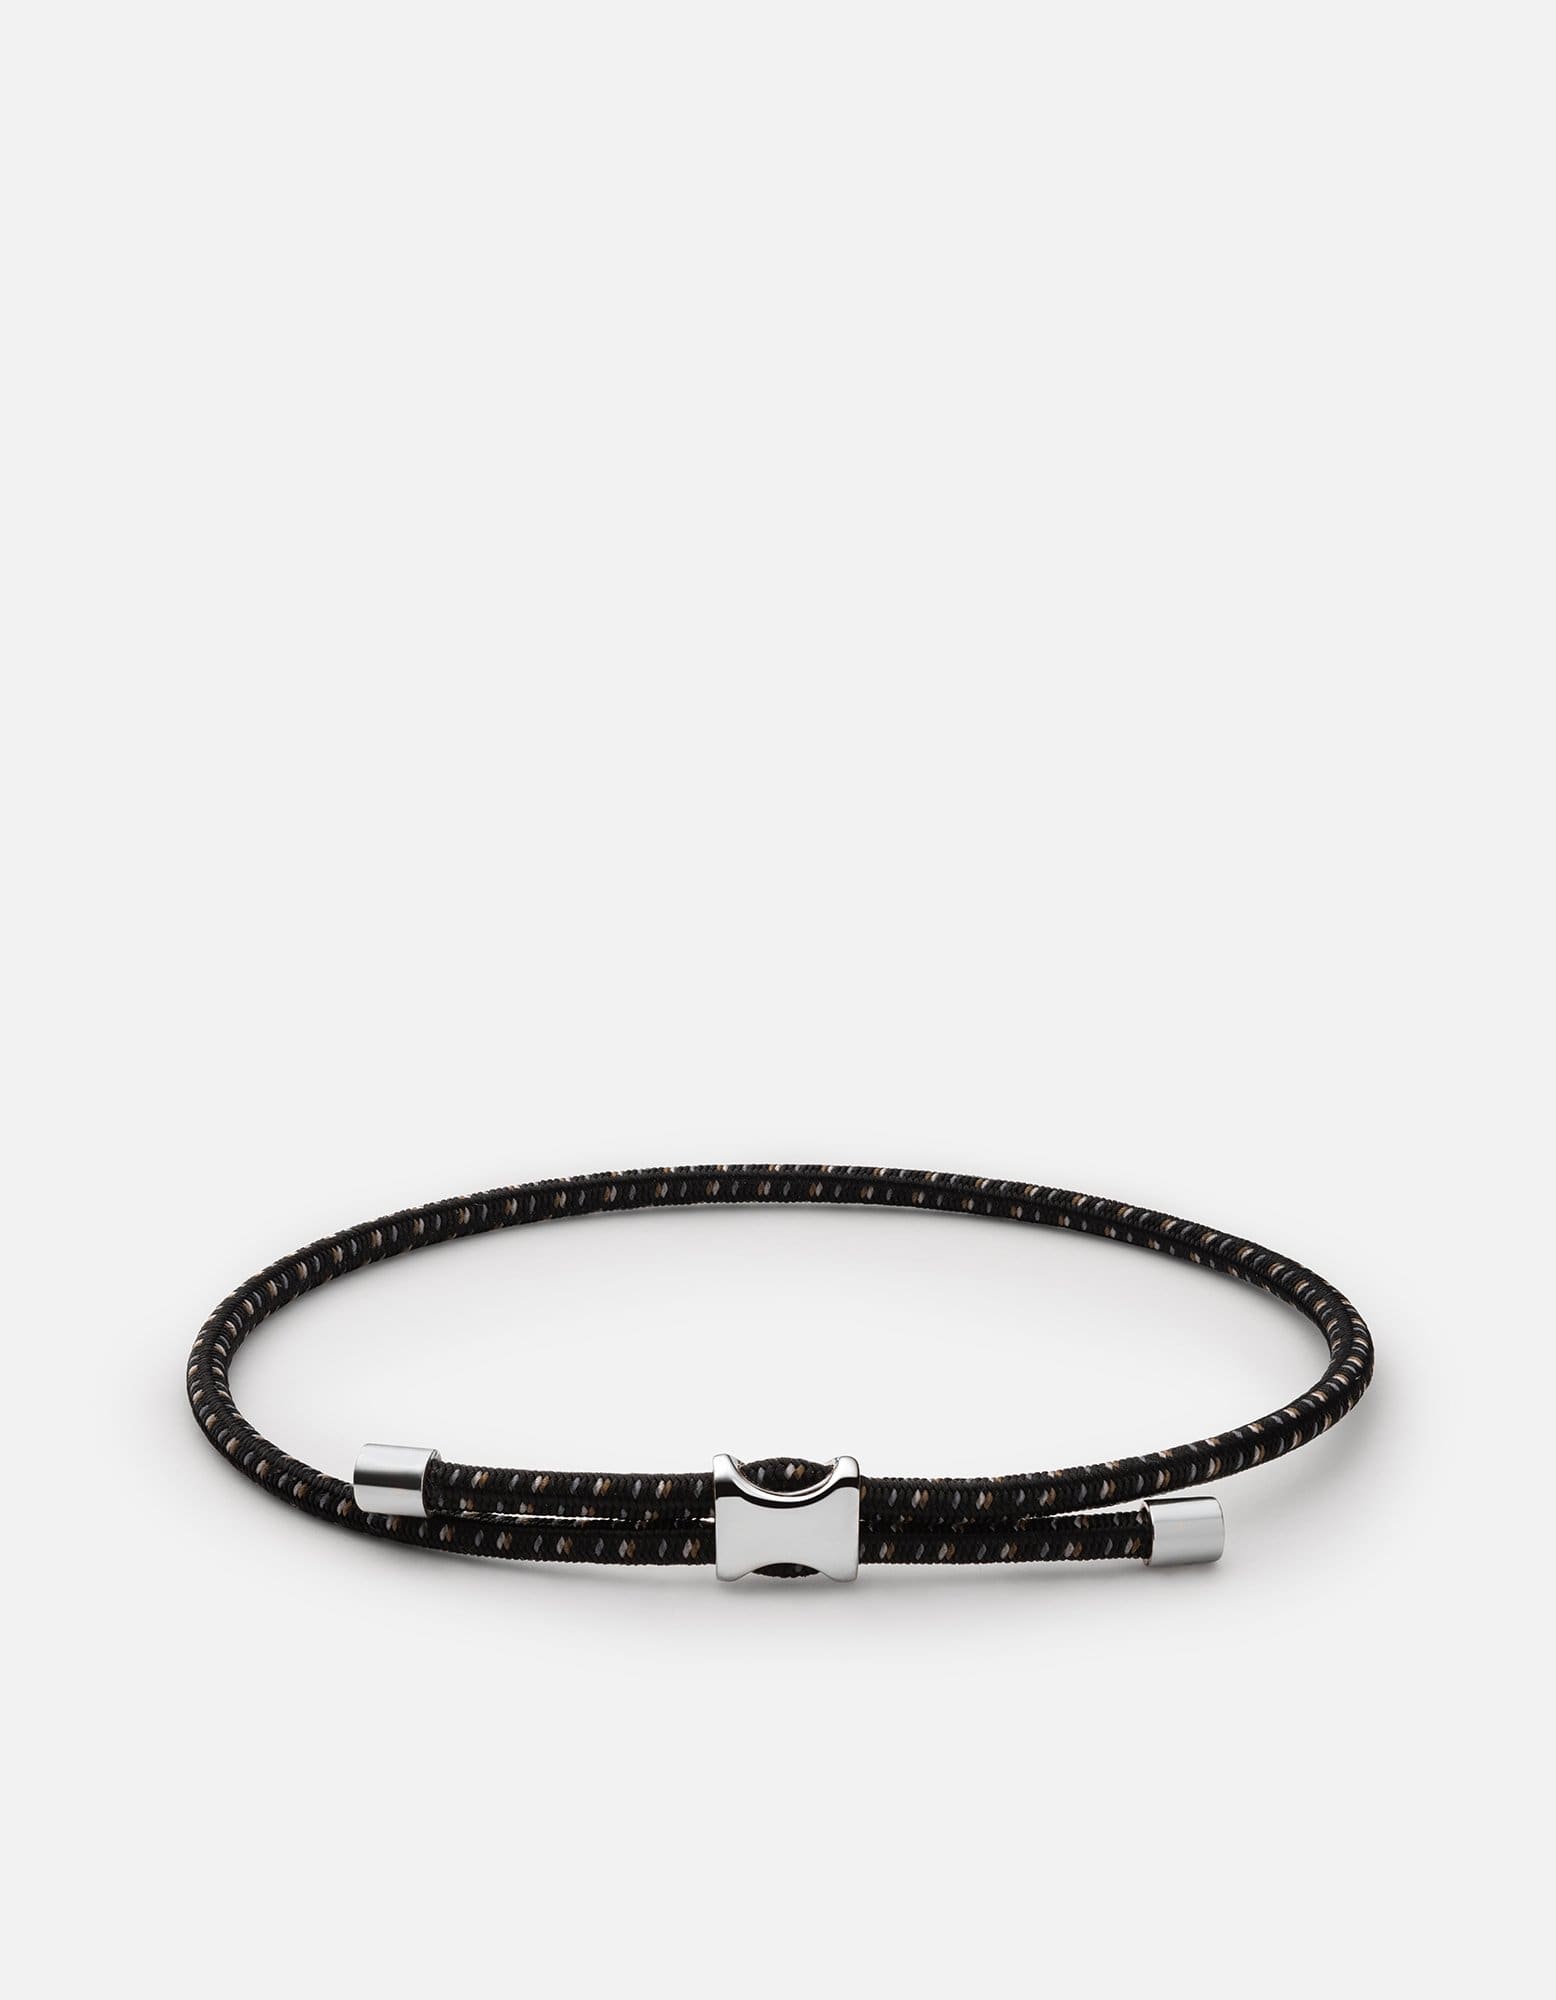 Miansai Men's Orson Loop Leather Bracelet, Sterling Silver, Size L